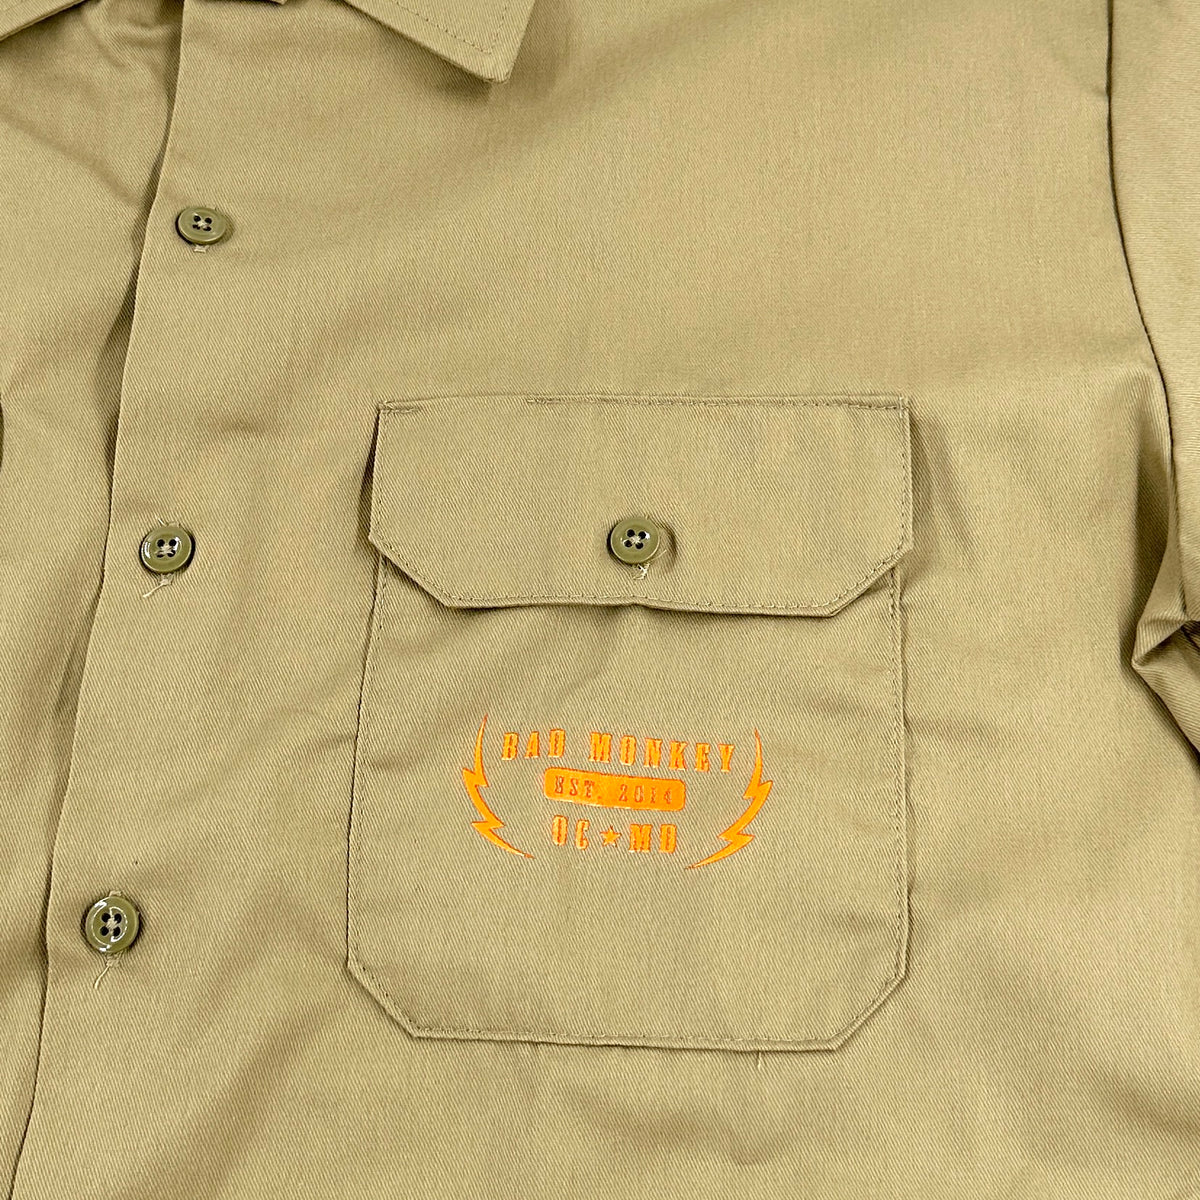 Johnny Bondo Hot Rodder Mechanic Shop Shirt XXL - Primer Grey - Dickies - Dirty Monkey Kustoms